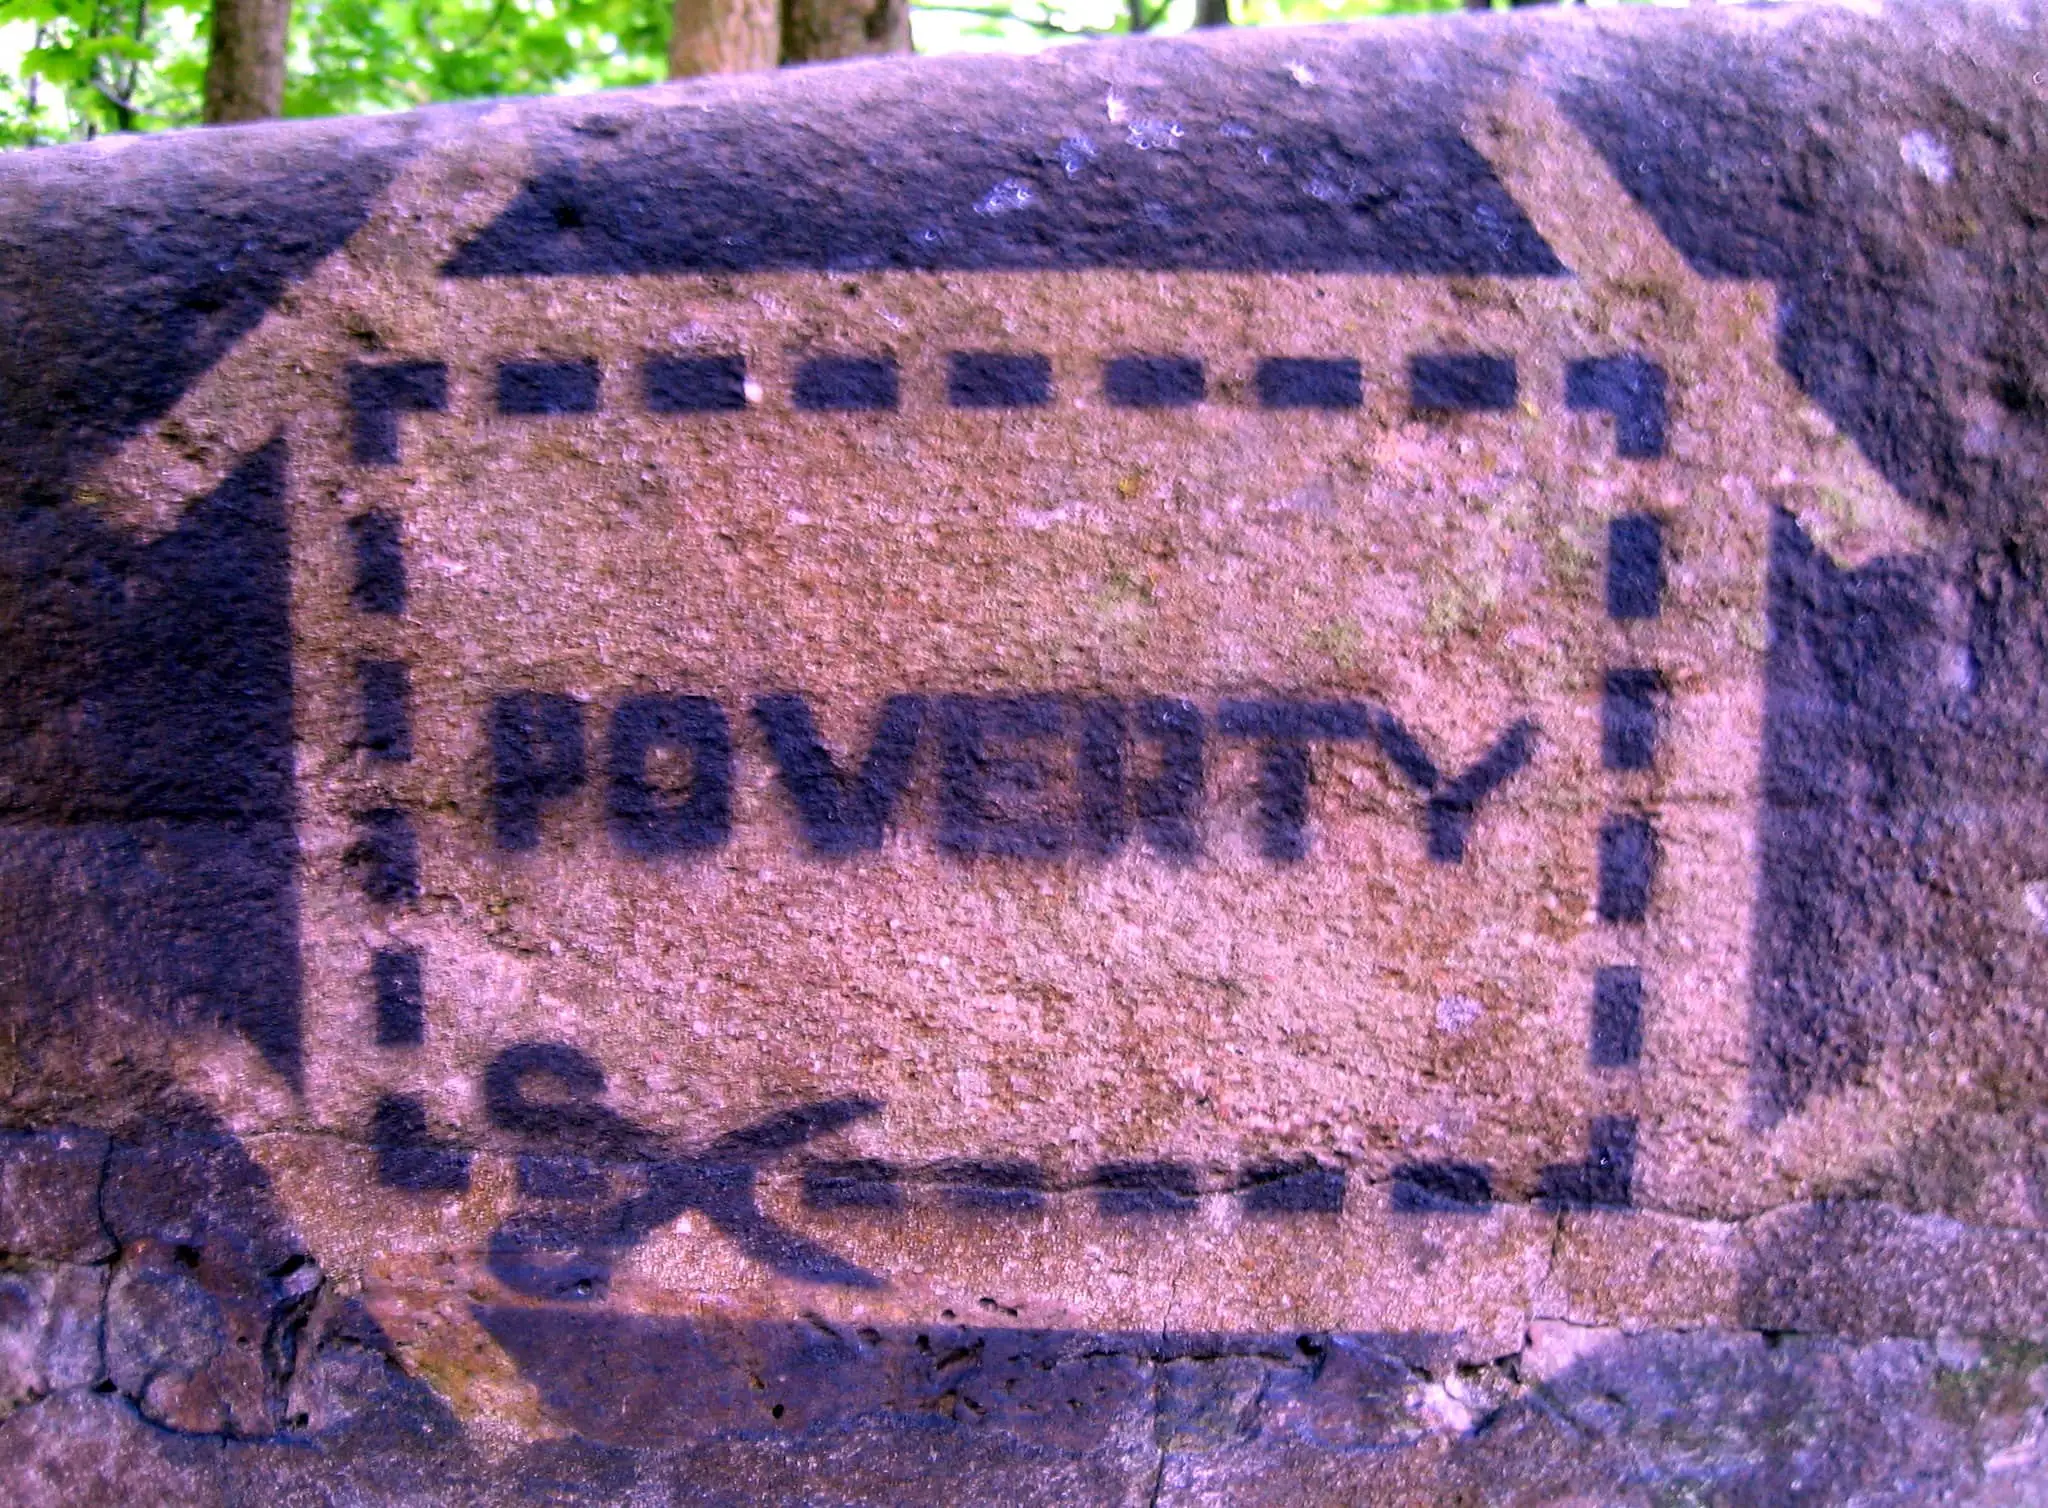 Poverty spray art on a wall